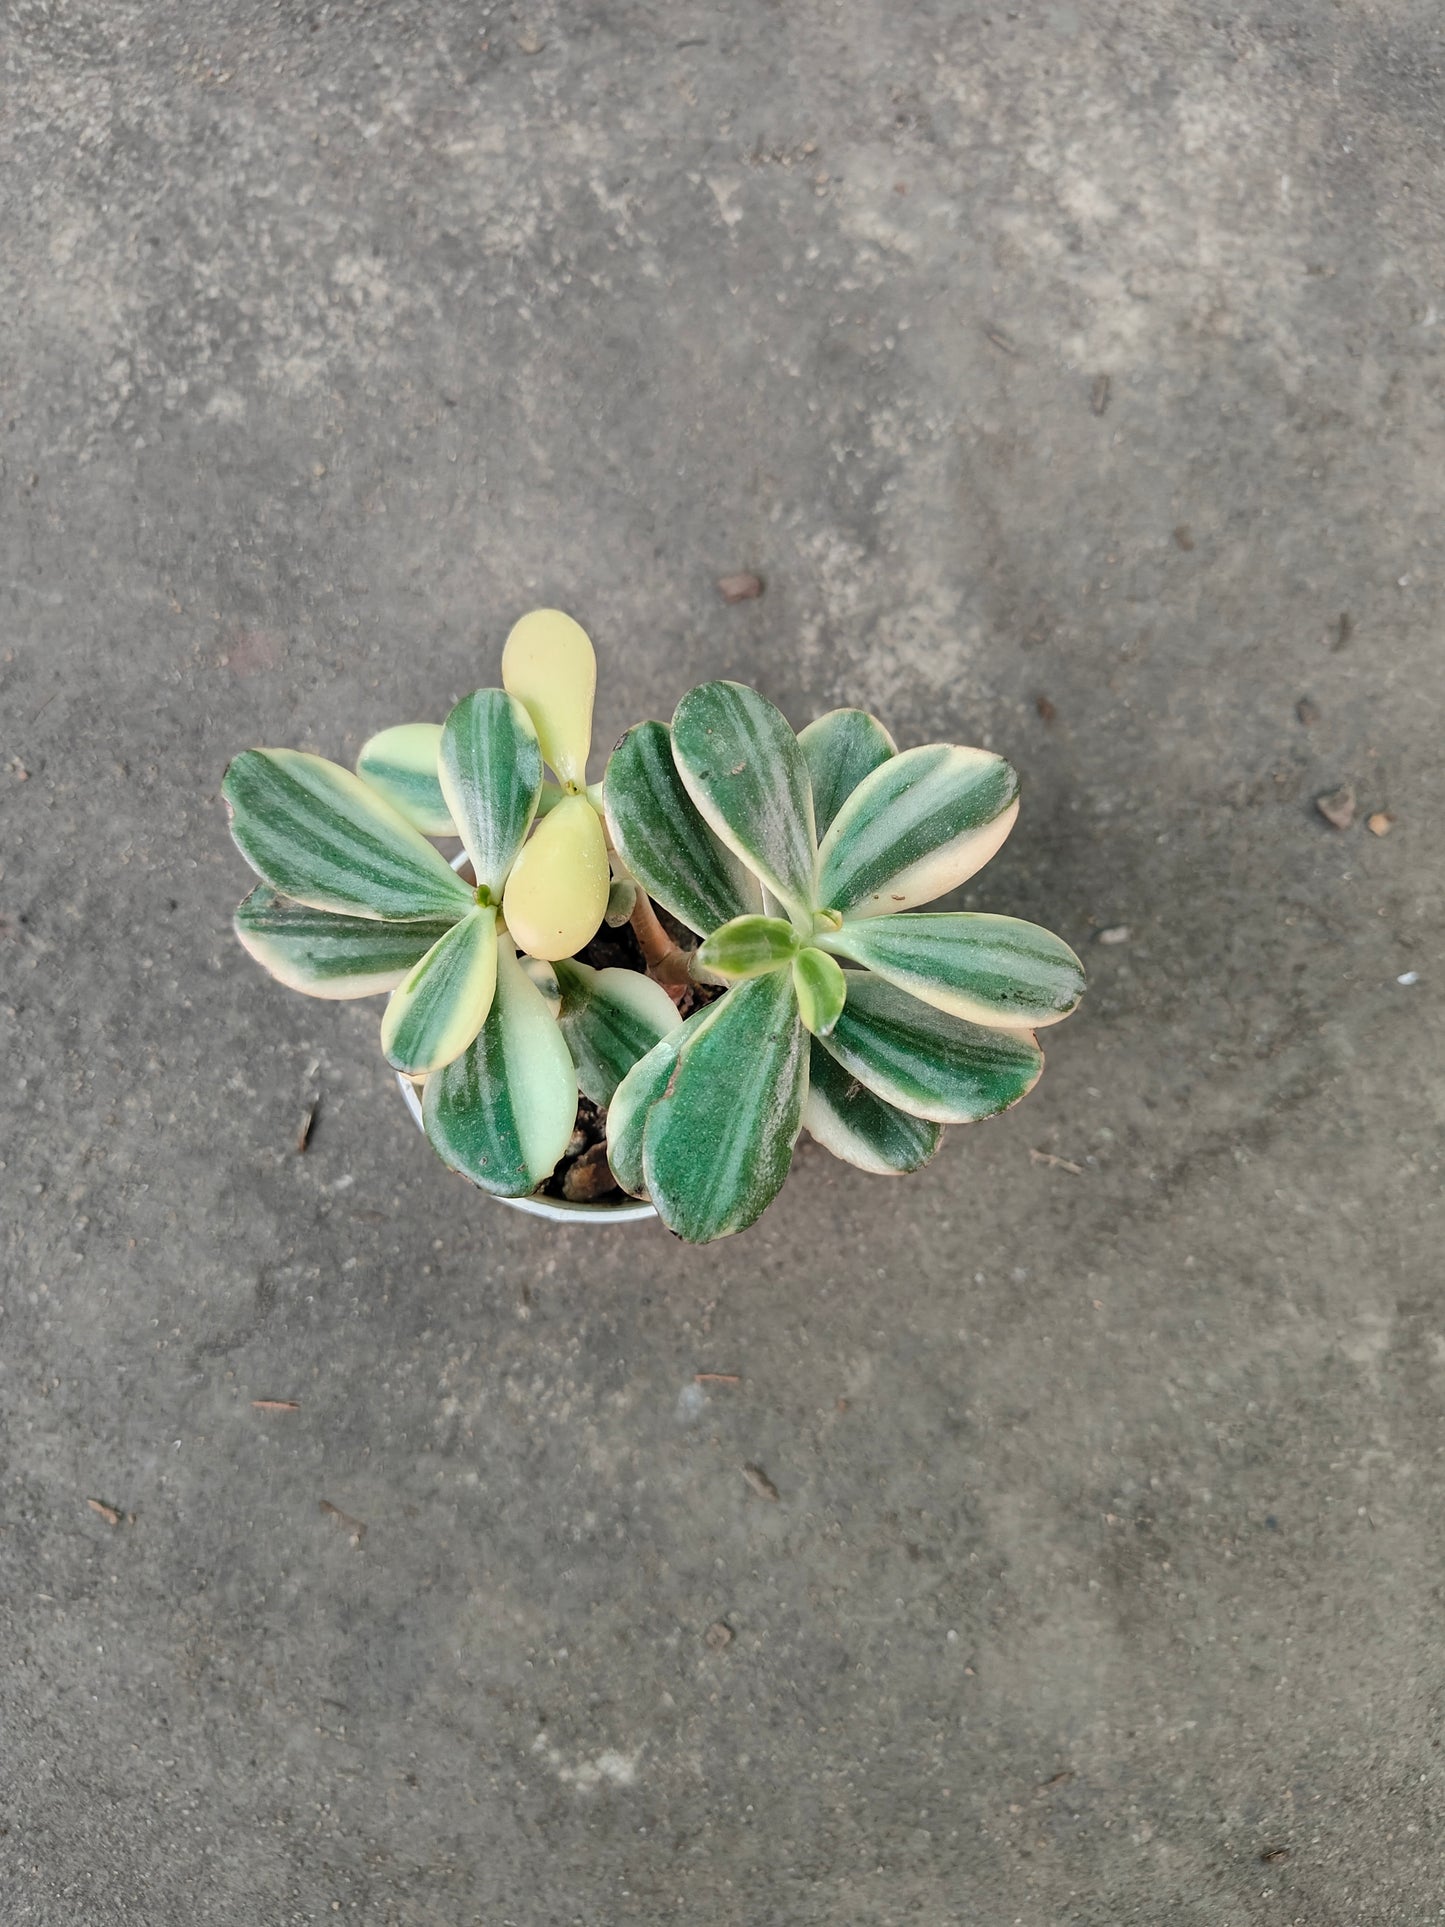 Variegated Crassula - Unique Succulent with Stunning Color Patterns | Premium Quality Plants